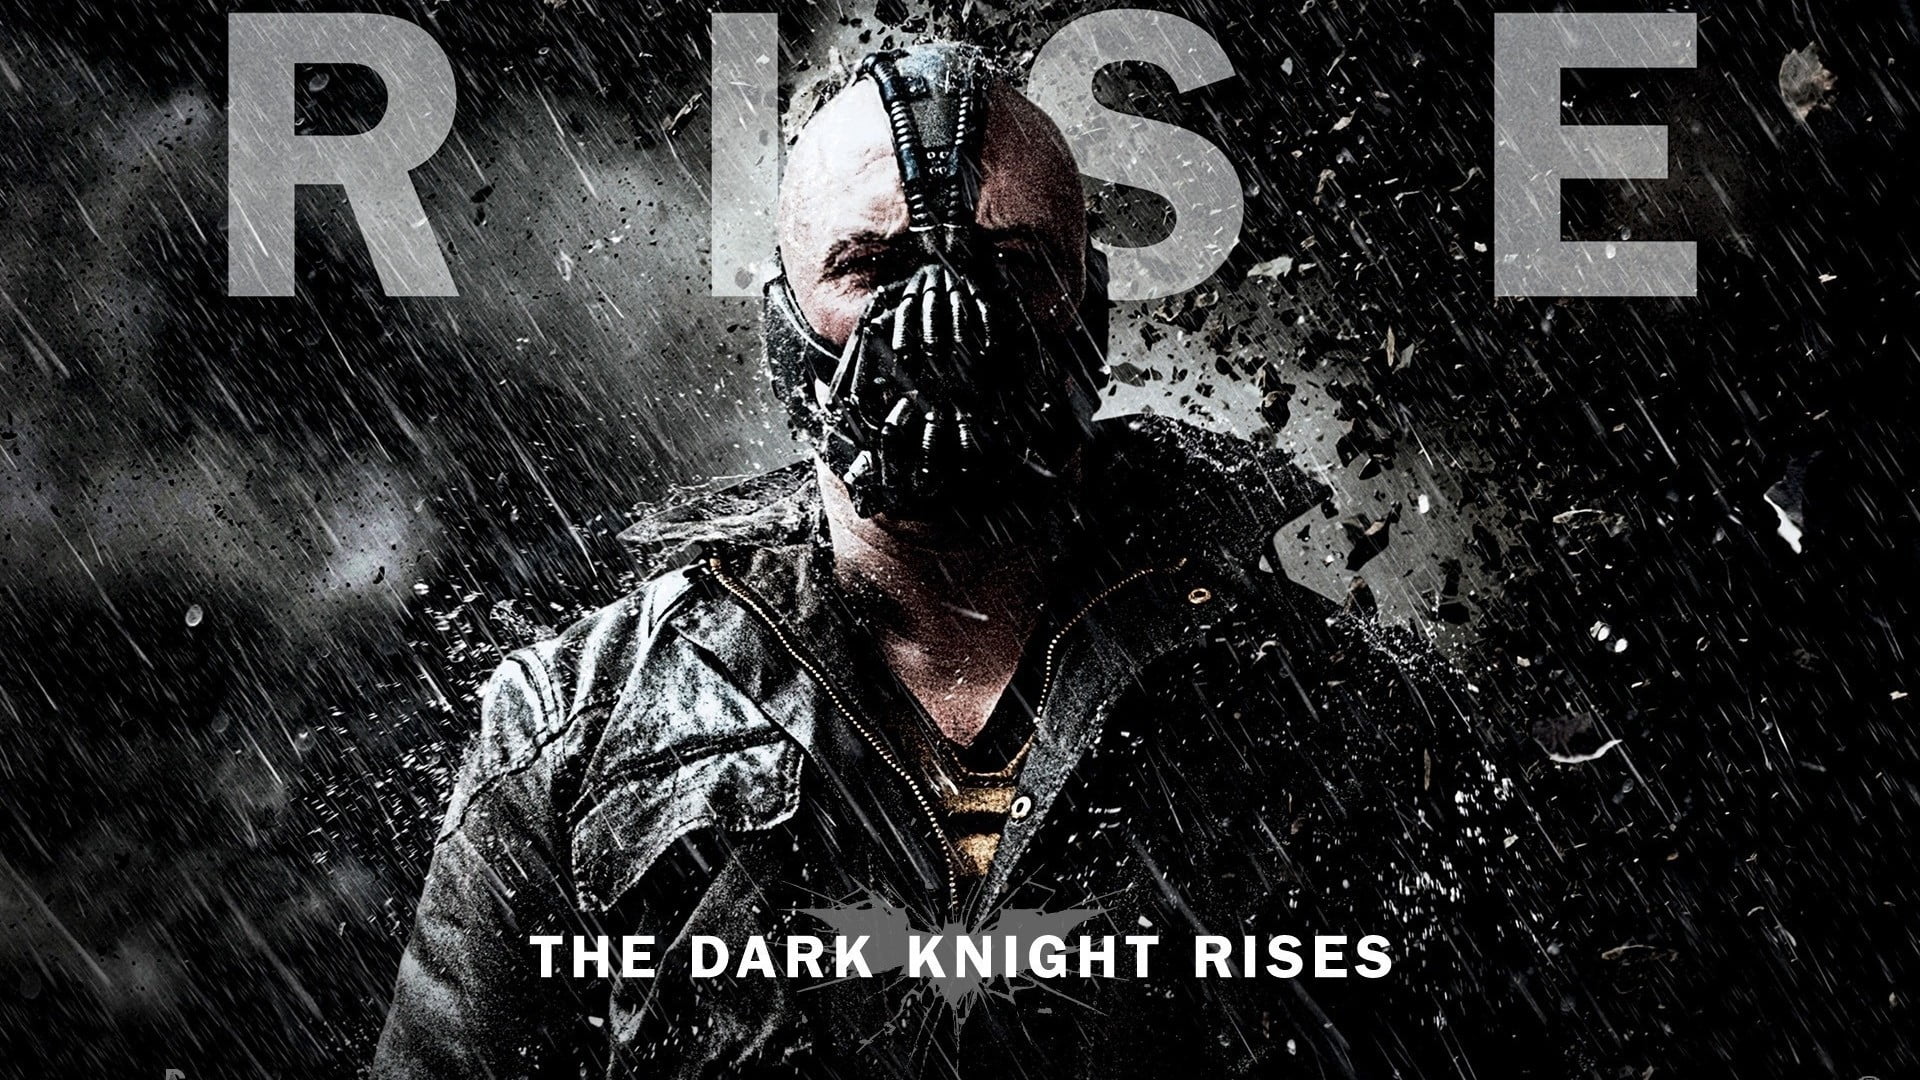 Batman The Dark Knight Rises digital wallpaper, The Dark Knight Rises, Bane, Tom Hardy, Batman